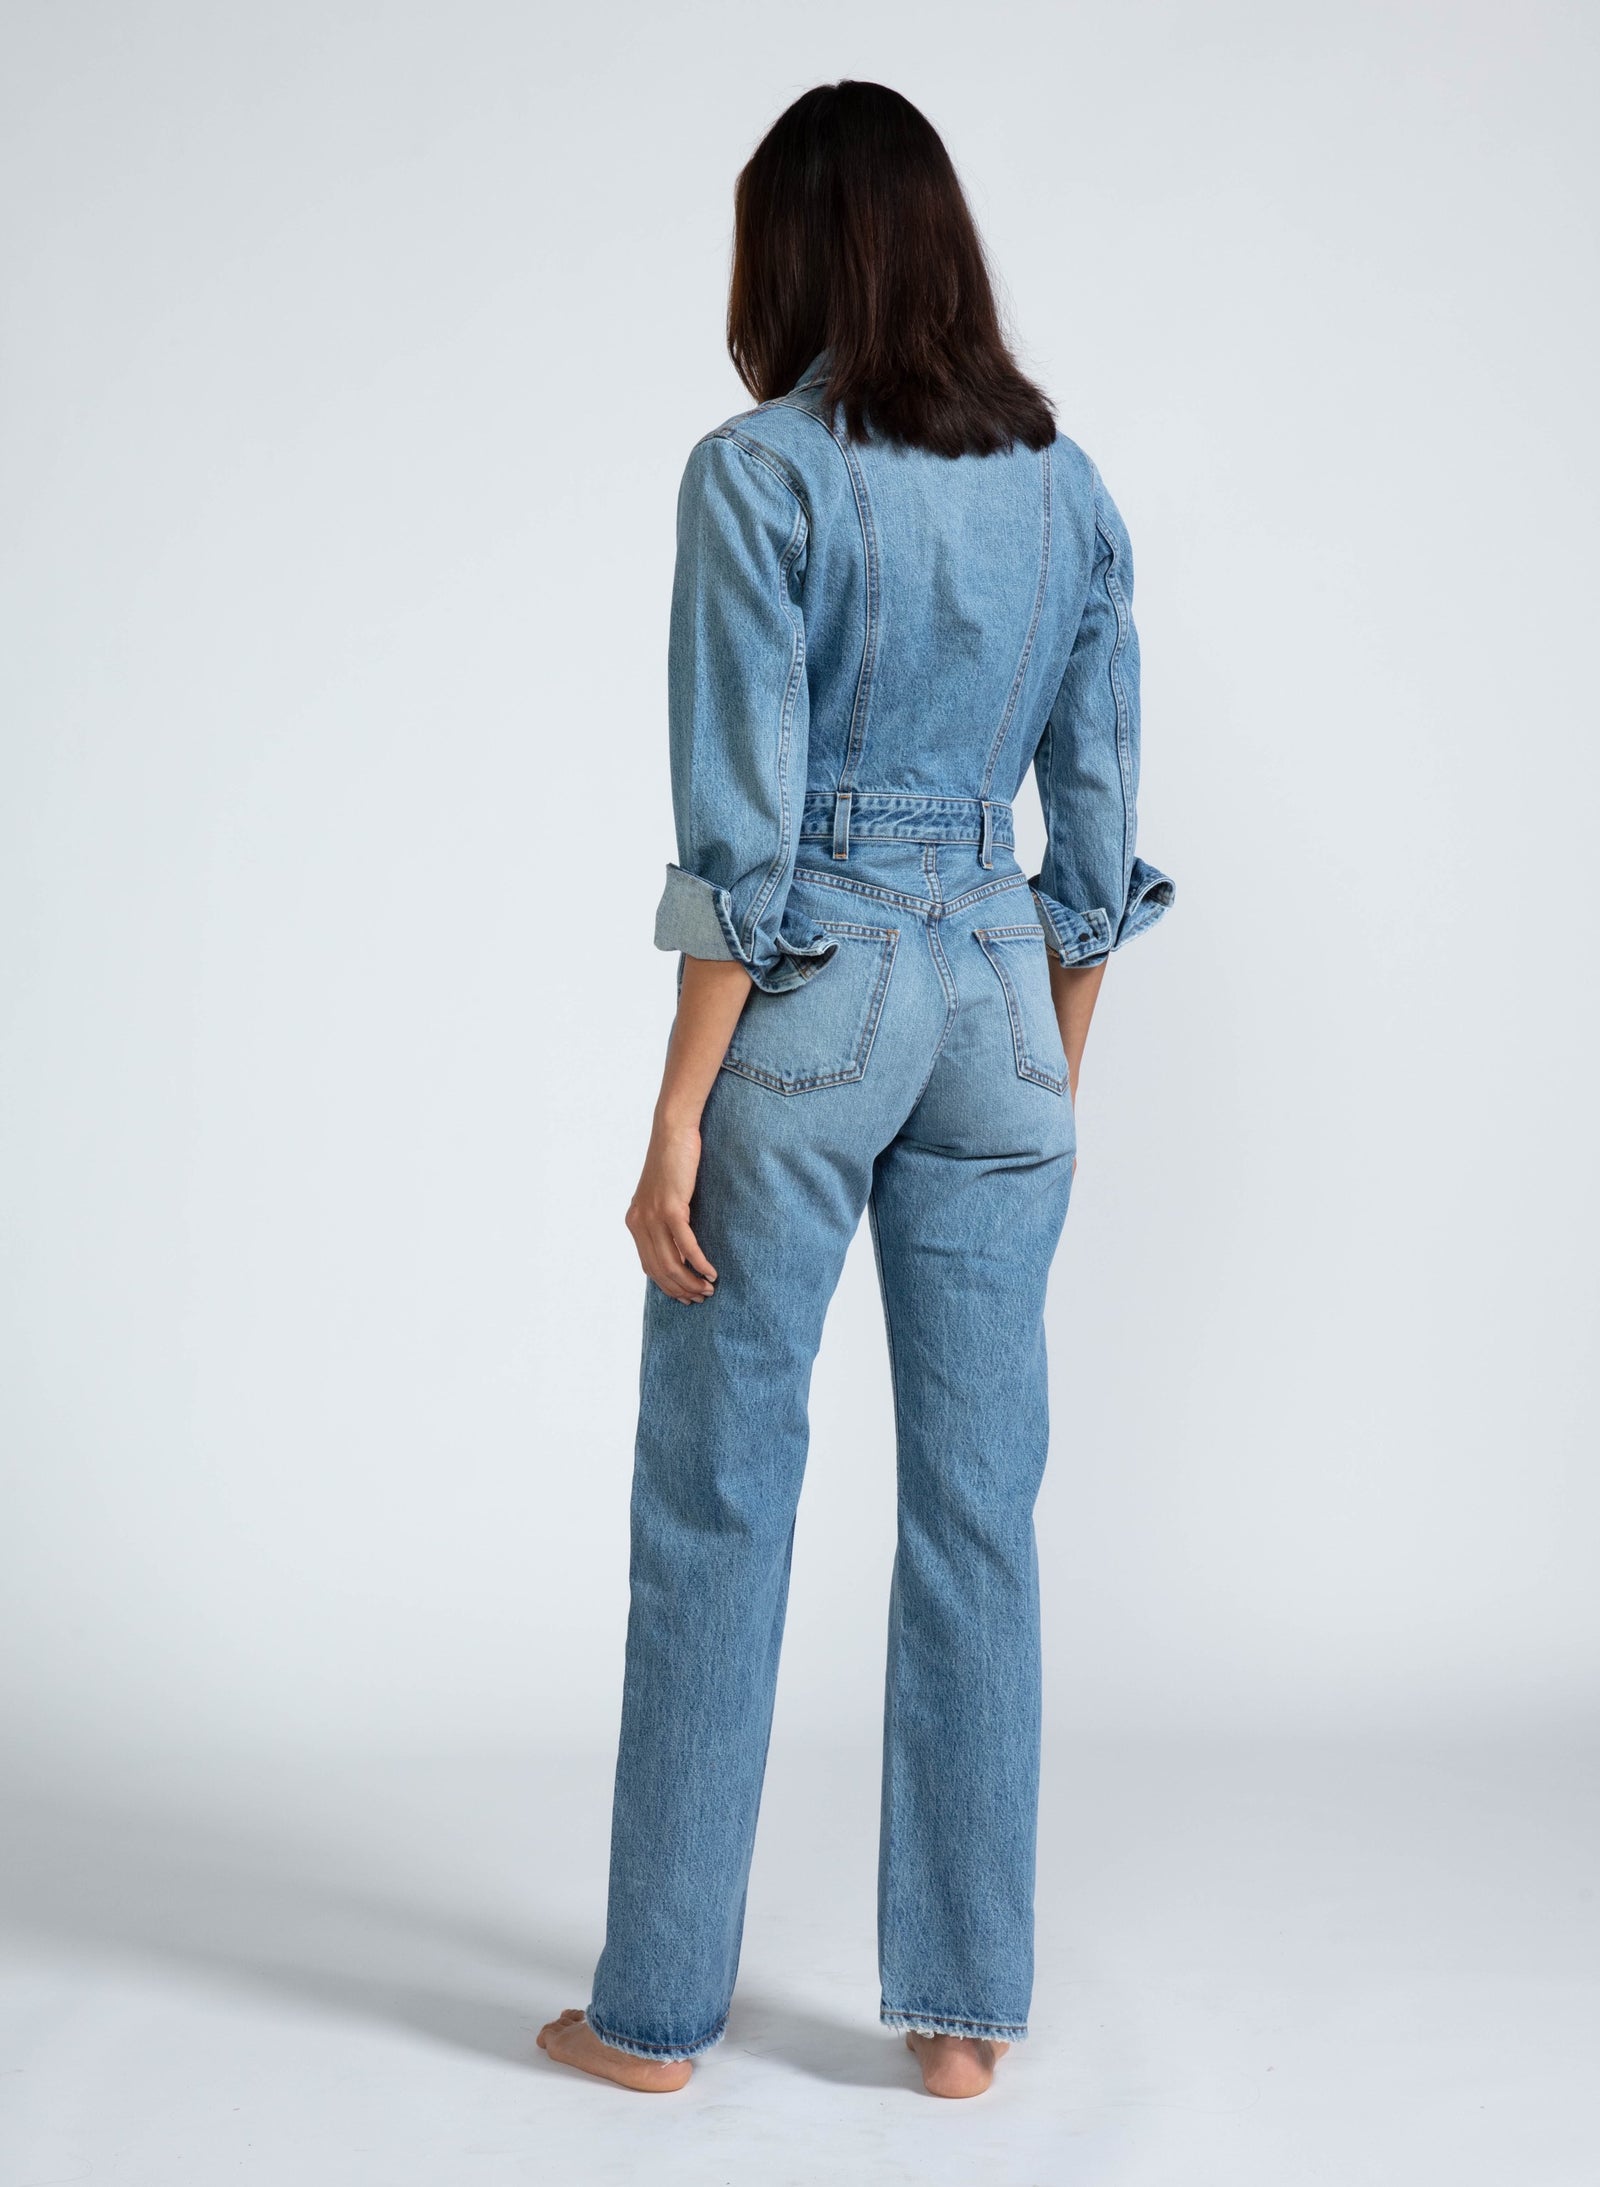 Blue Denim Two Piece Set Jeans Suit for Women Long Sleeve Jacket Crop Top  and Pants Set Women 2 Piece Club Outfits Matching S… | Frauen anzug,  Modische hosen, Anzug